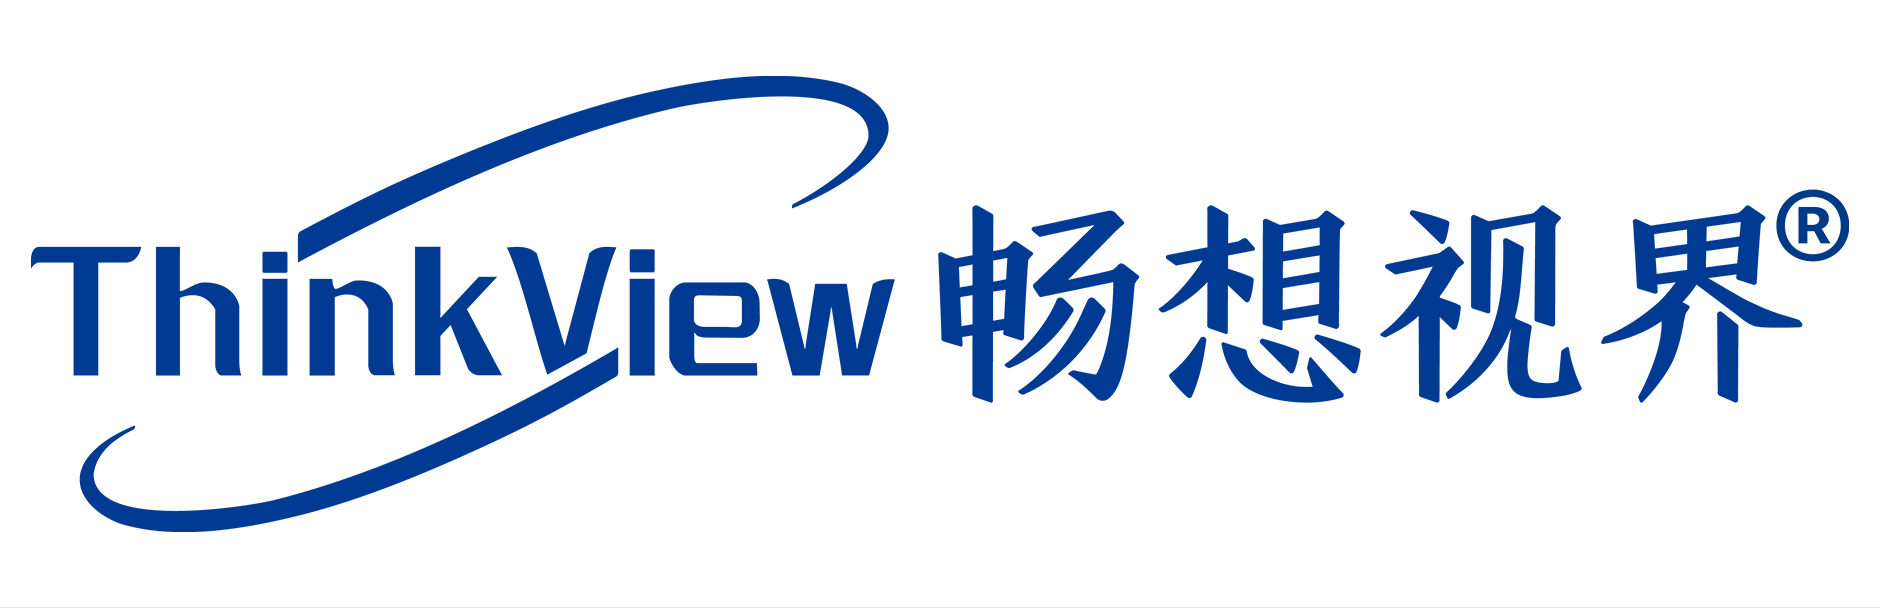 Shenzhen ThinkView Teicneolaíocht Co, Teo.